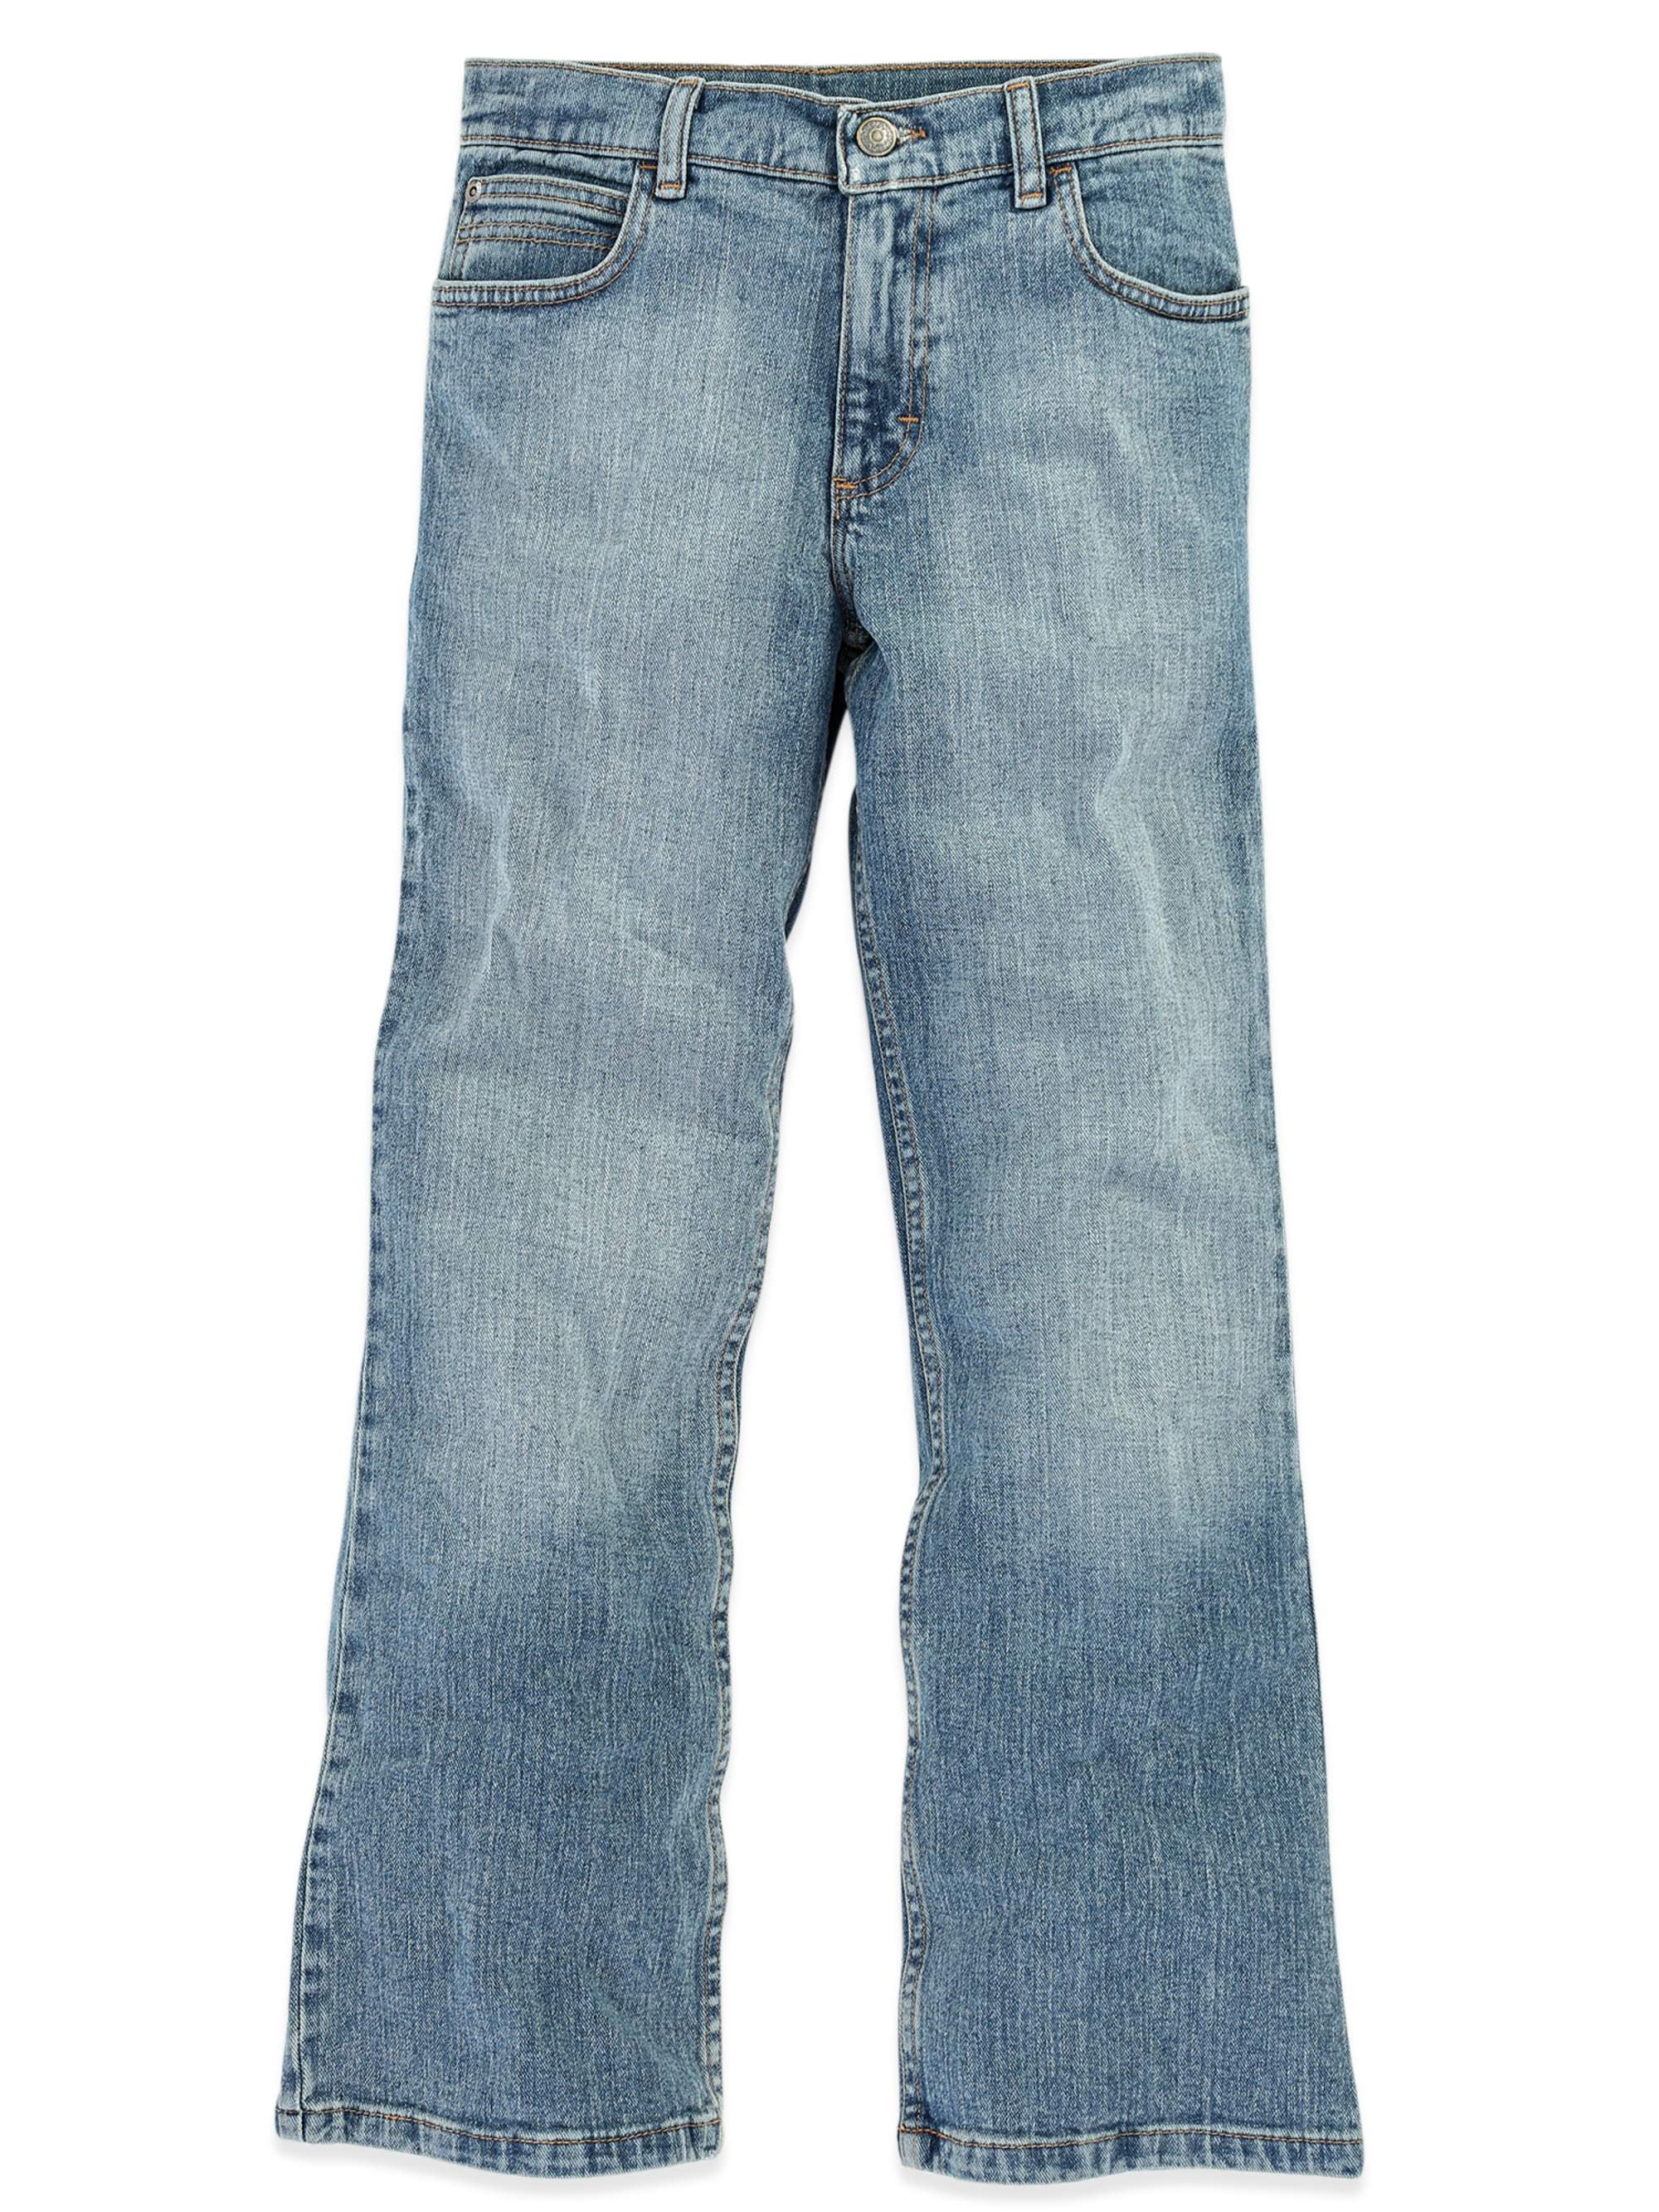 Wrangler Husky Jeans Size Chart